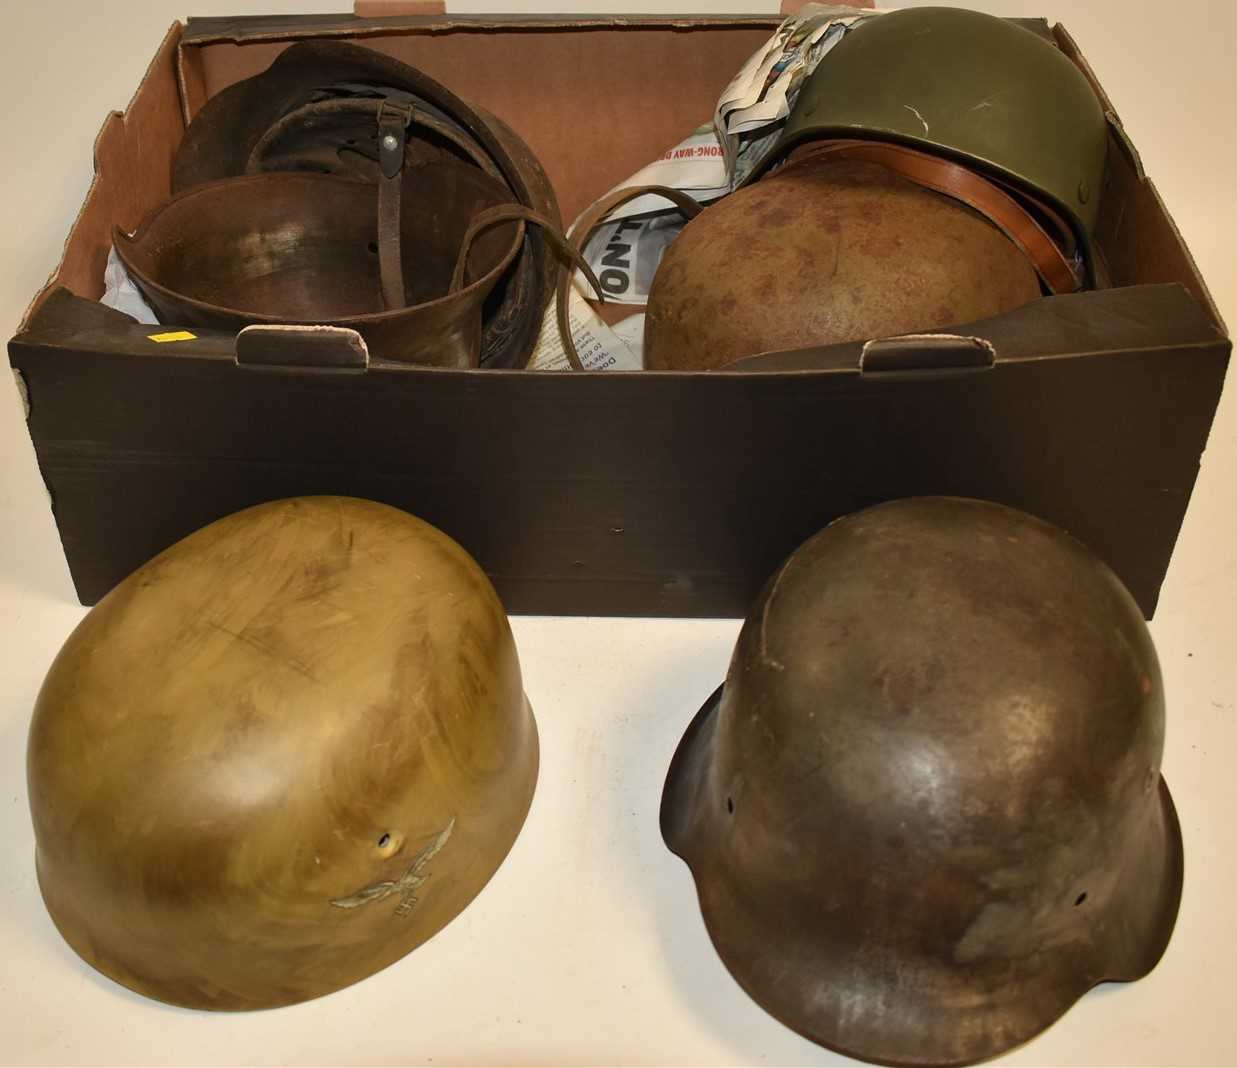 Lot 2 - German helmets